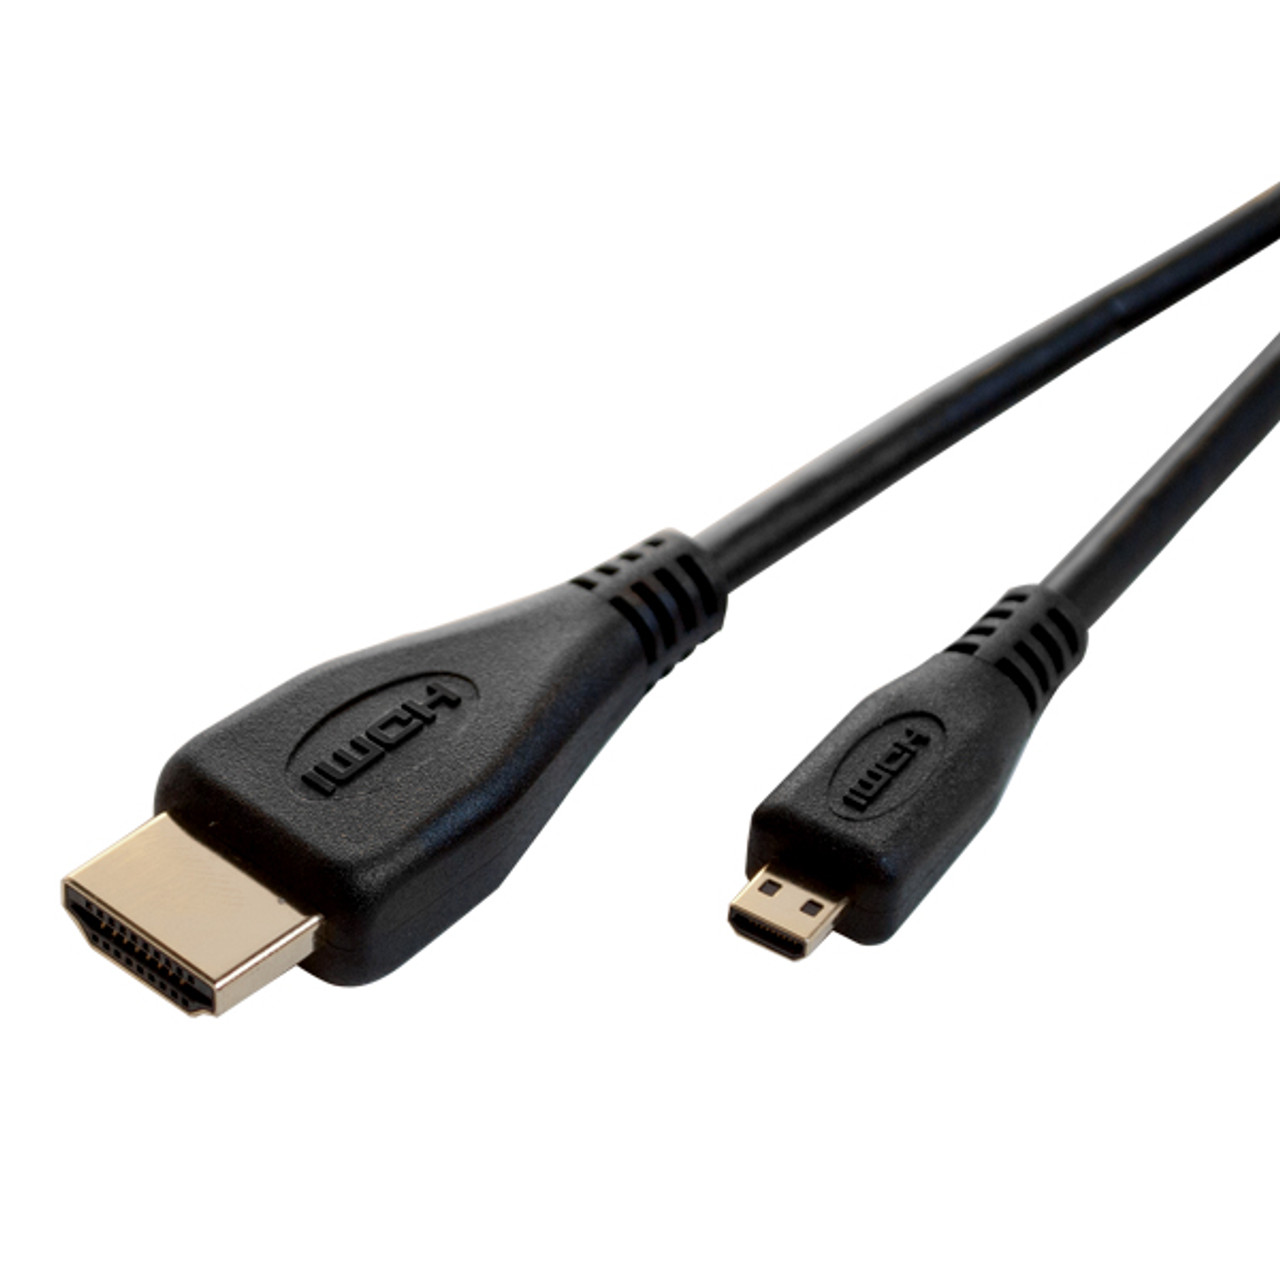 Type d кабель. Type-d HDMI разъем. ++D Cable Type. G900fxxs1cqd11&11c82c58 HDMI.